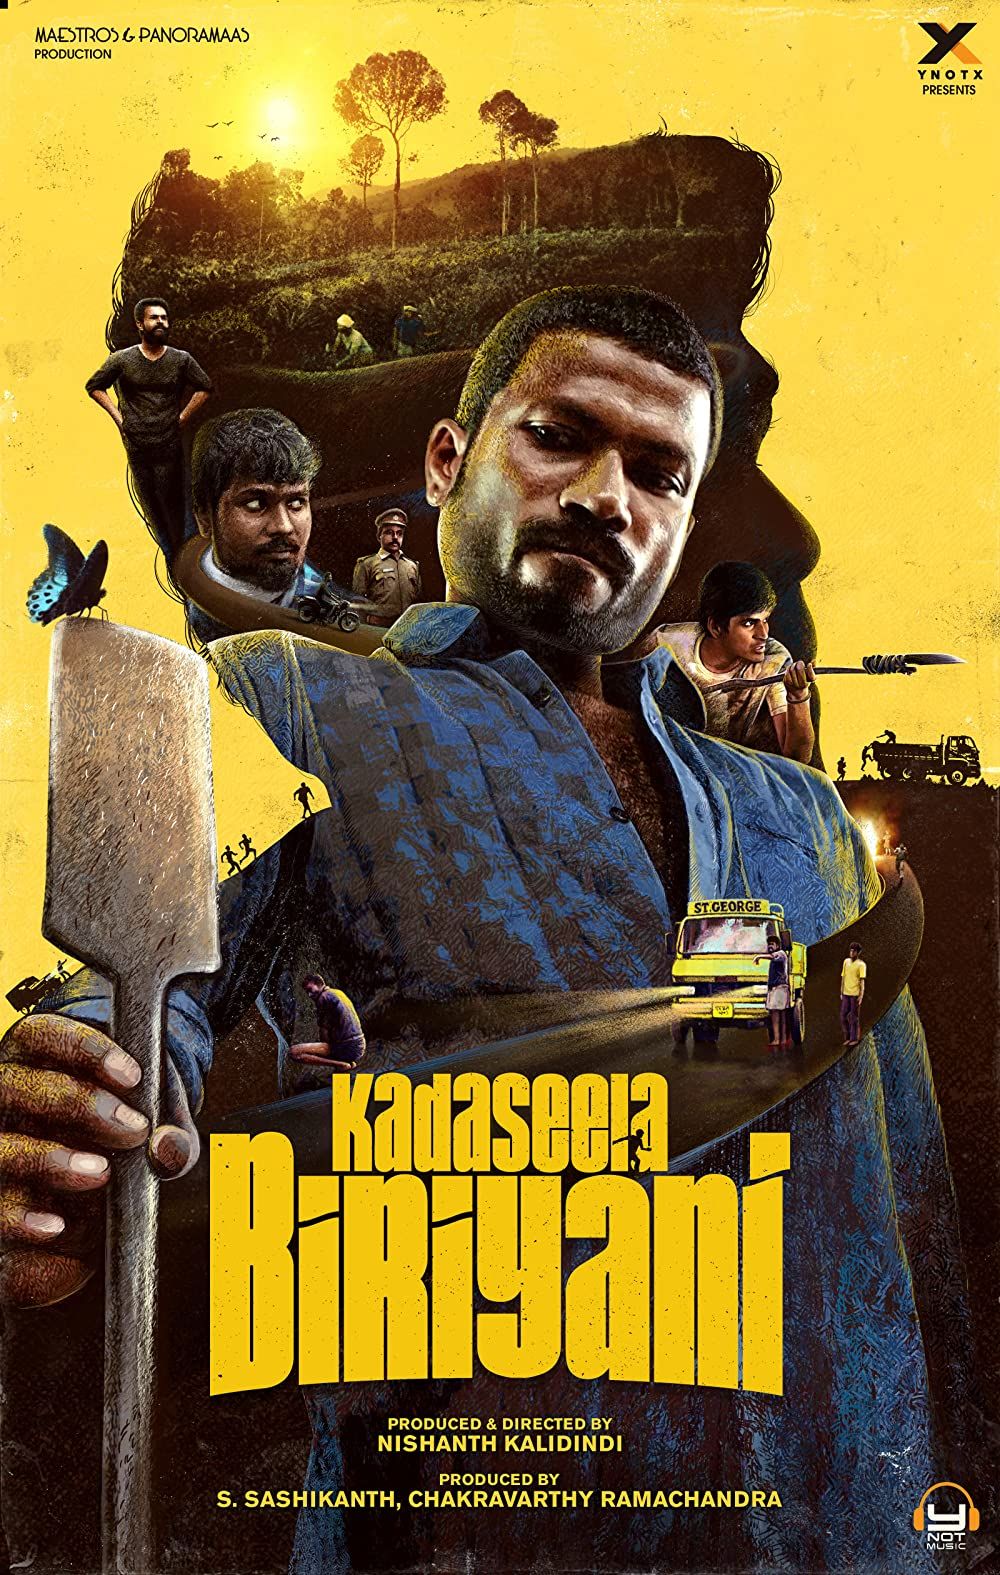 Kadaseela Biriyani (2021) Hindi Dubbed HDRip download full movie